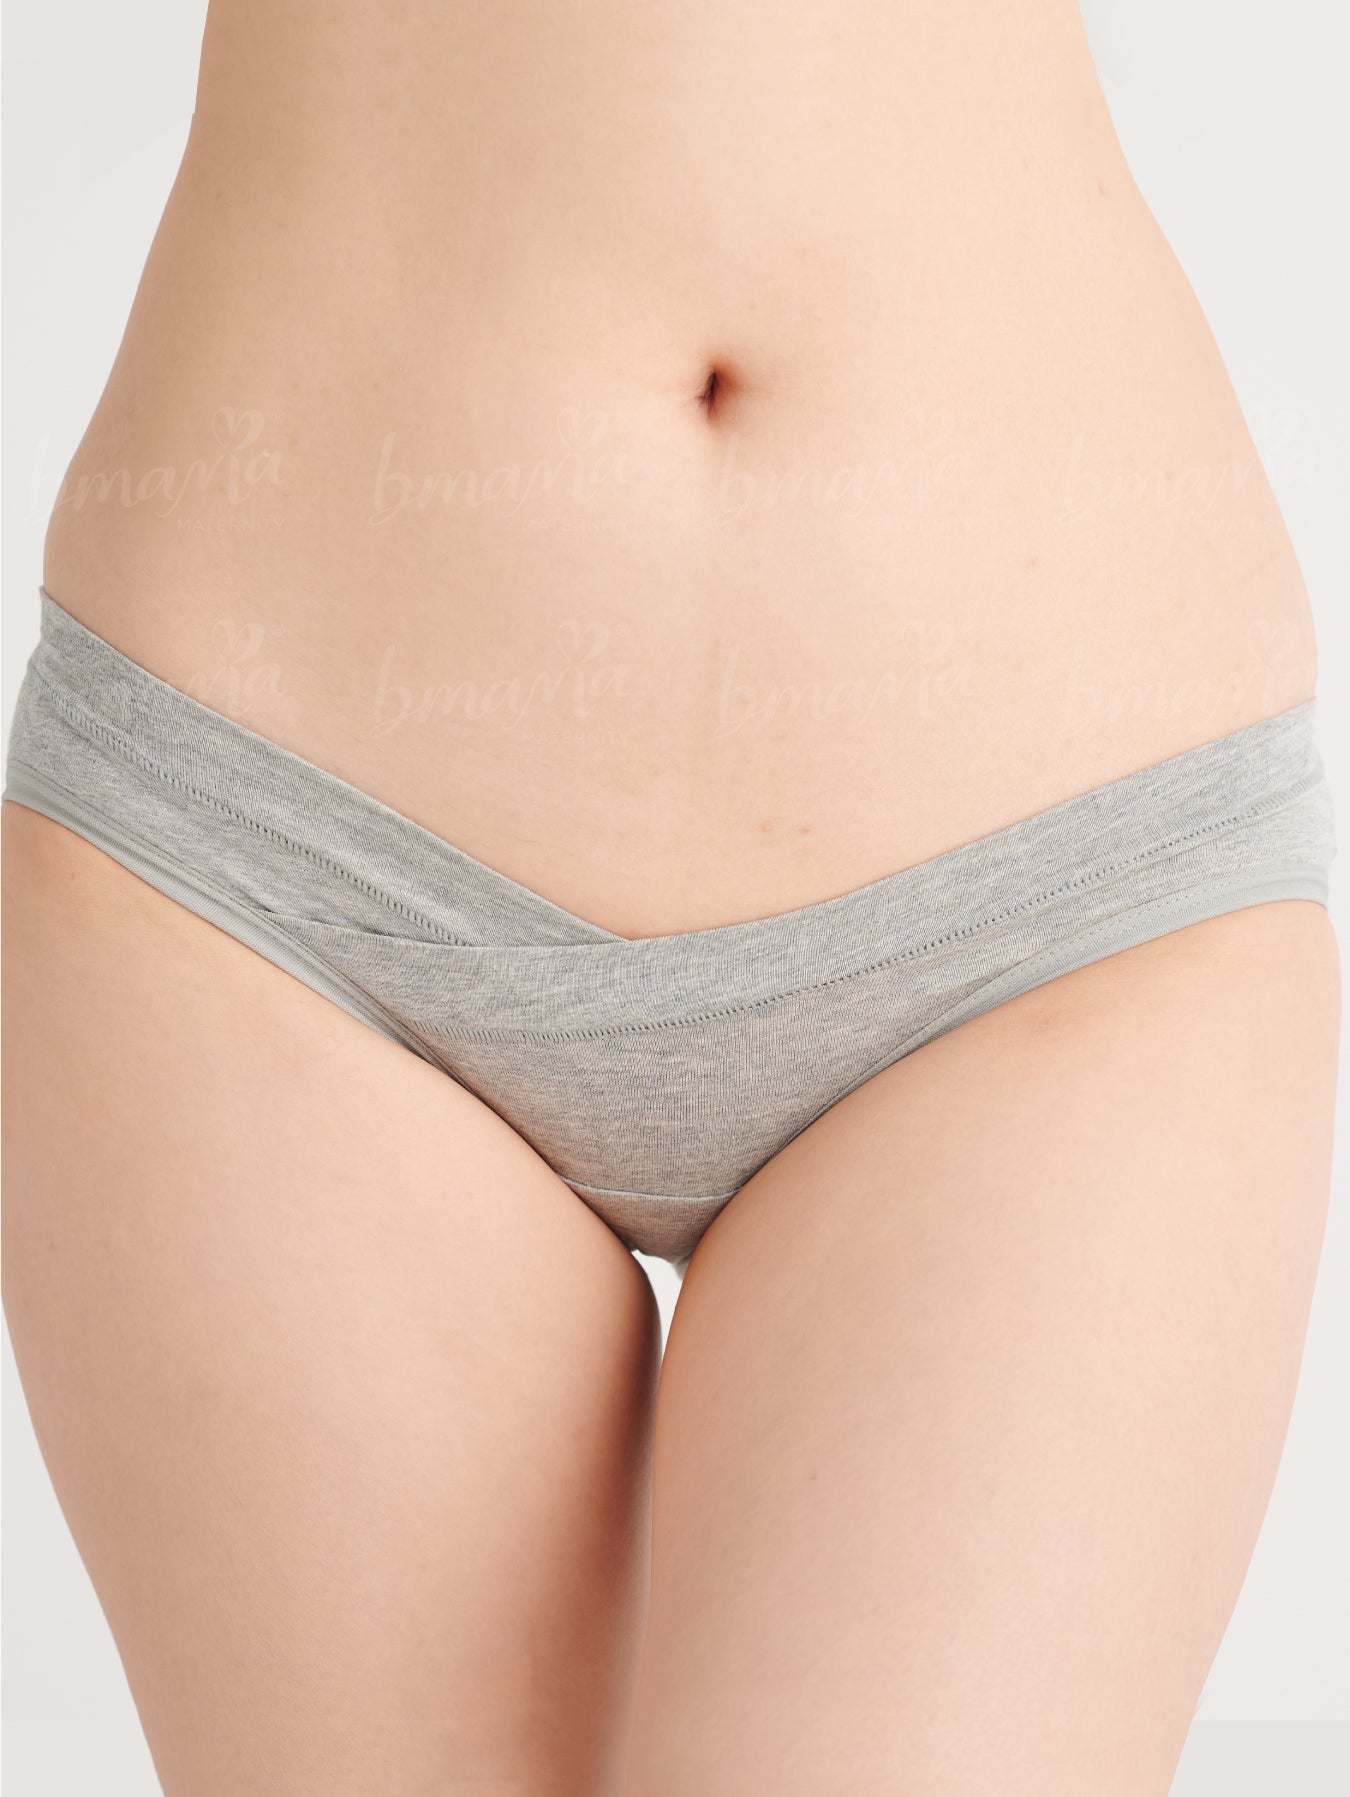 Maternity Panties Underwear Low Waist Women Pregnant Panties Cotton  U-Shaped Briefs